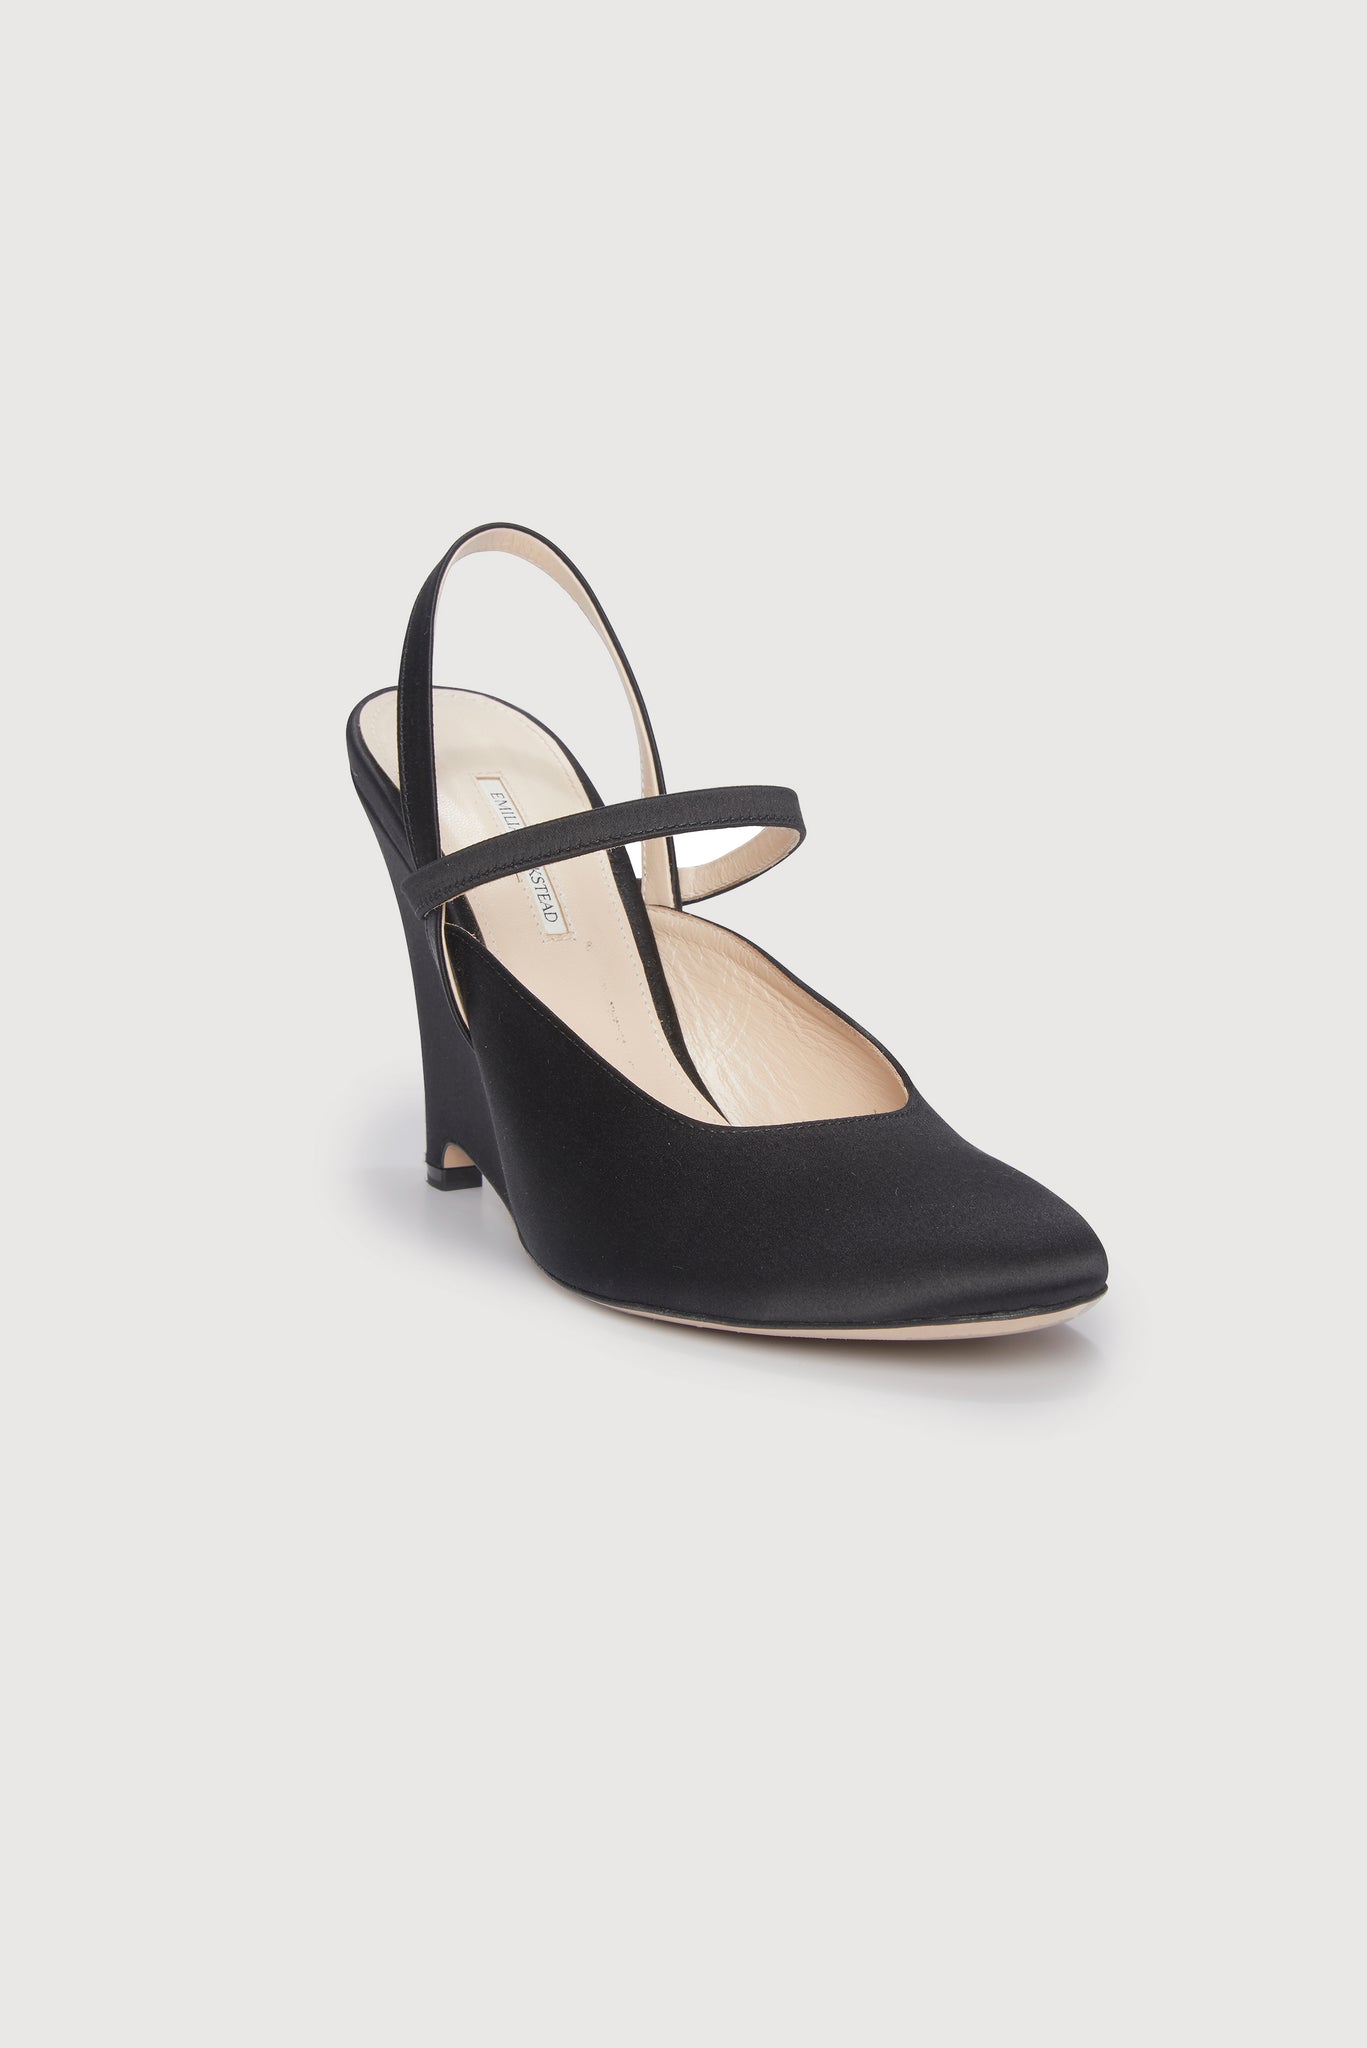 Aster Black Satin Wedge Shoes | Emilia Wickstead